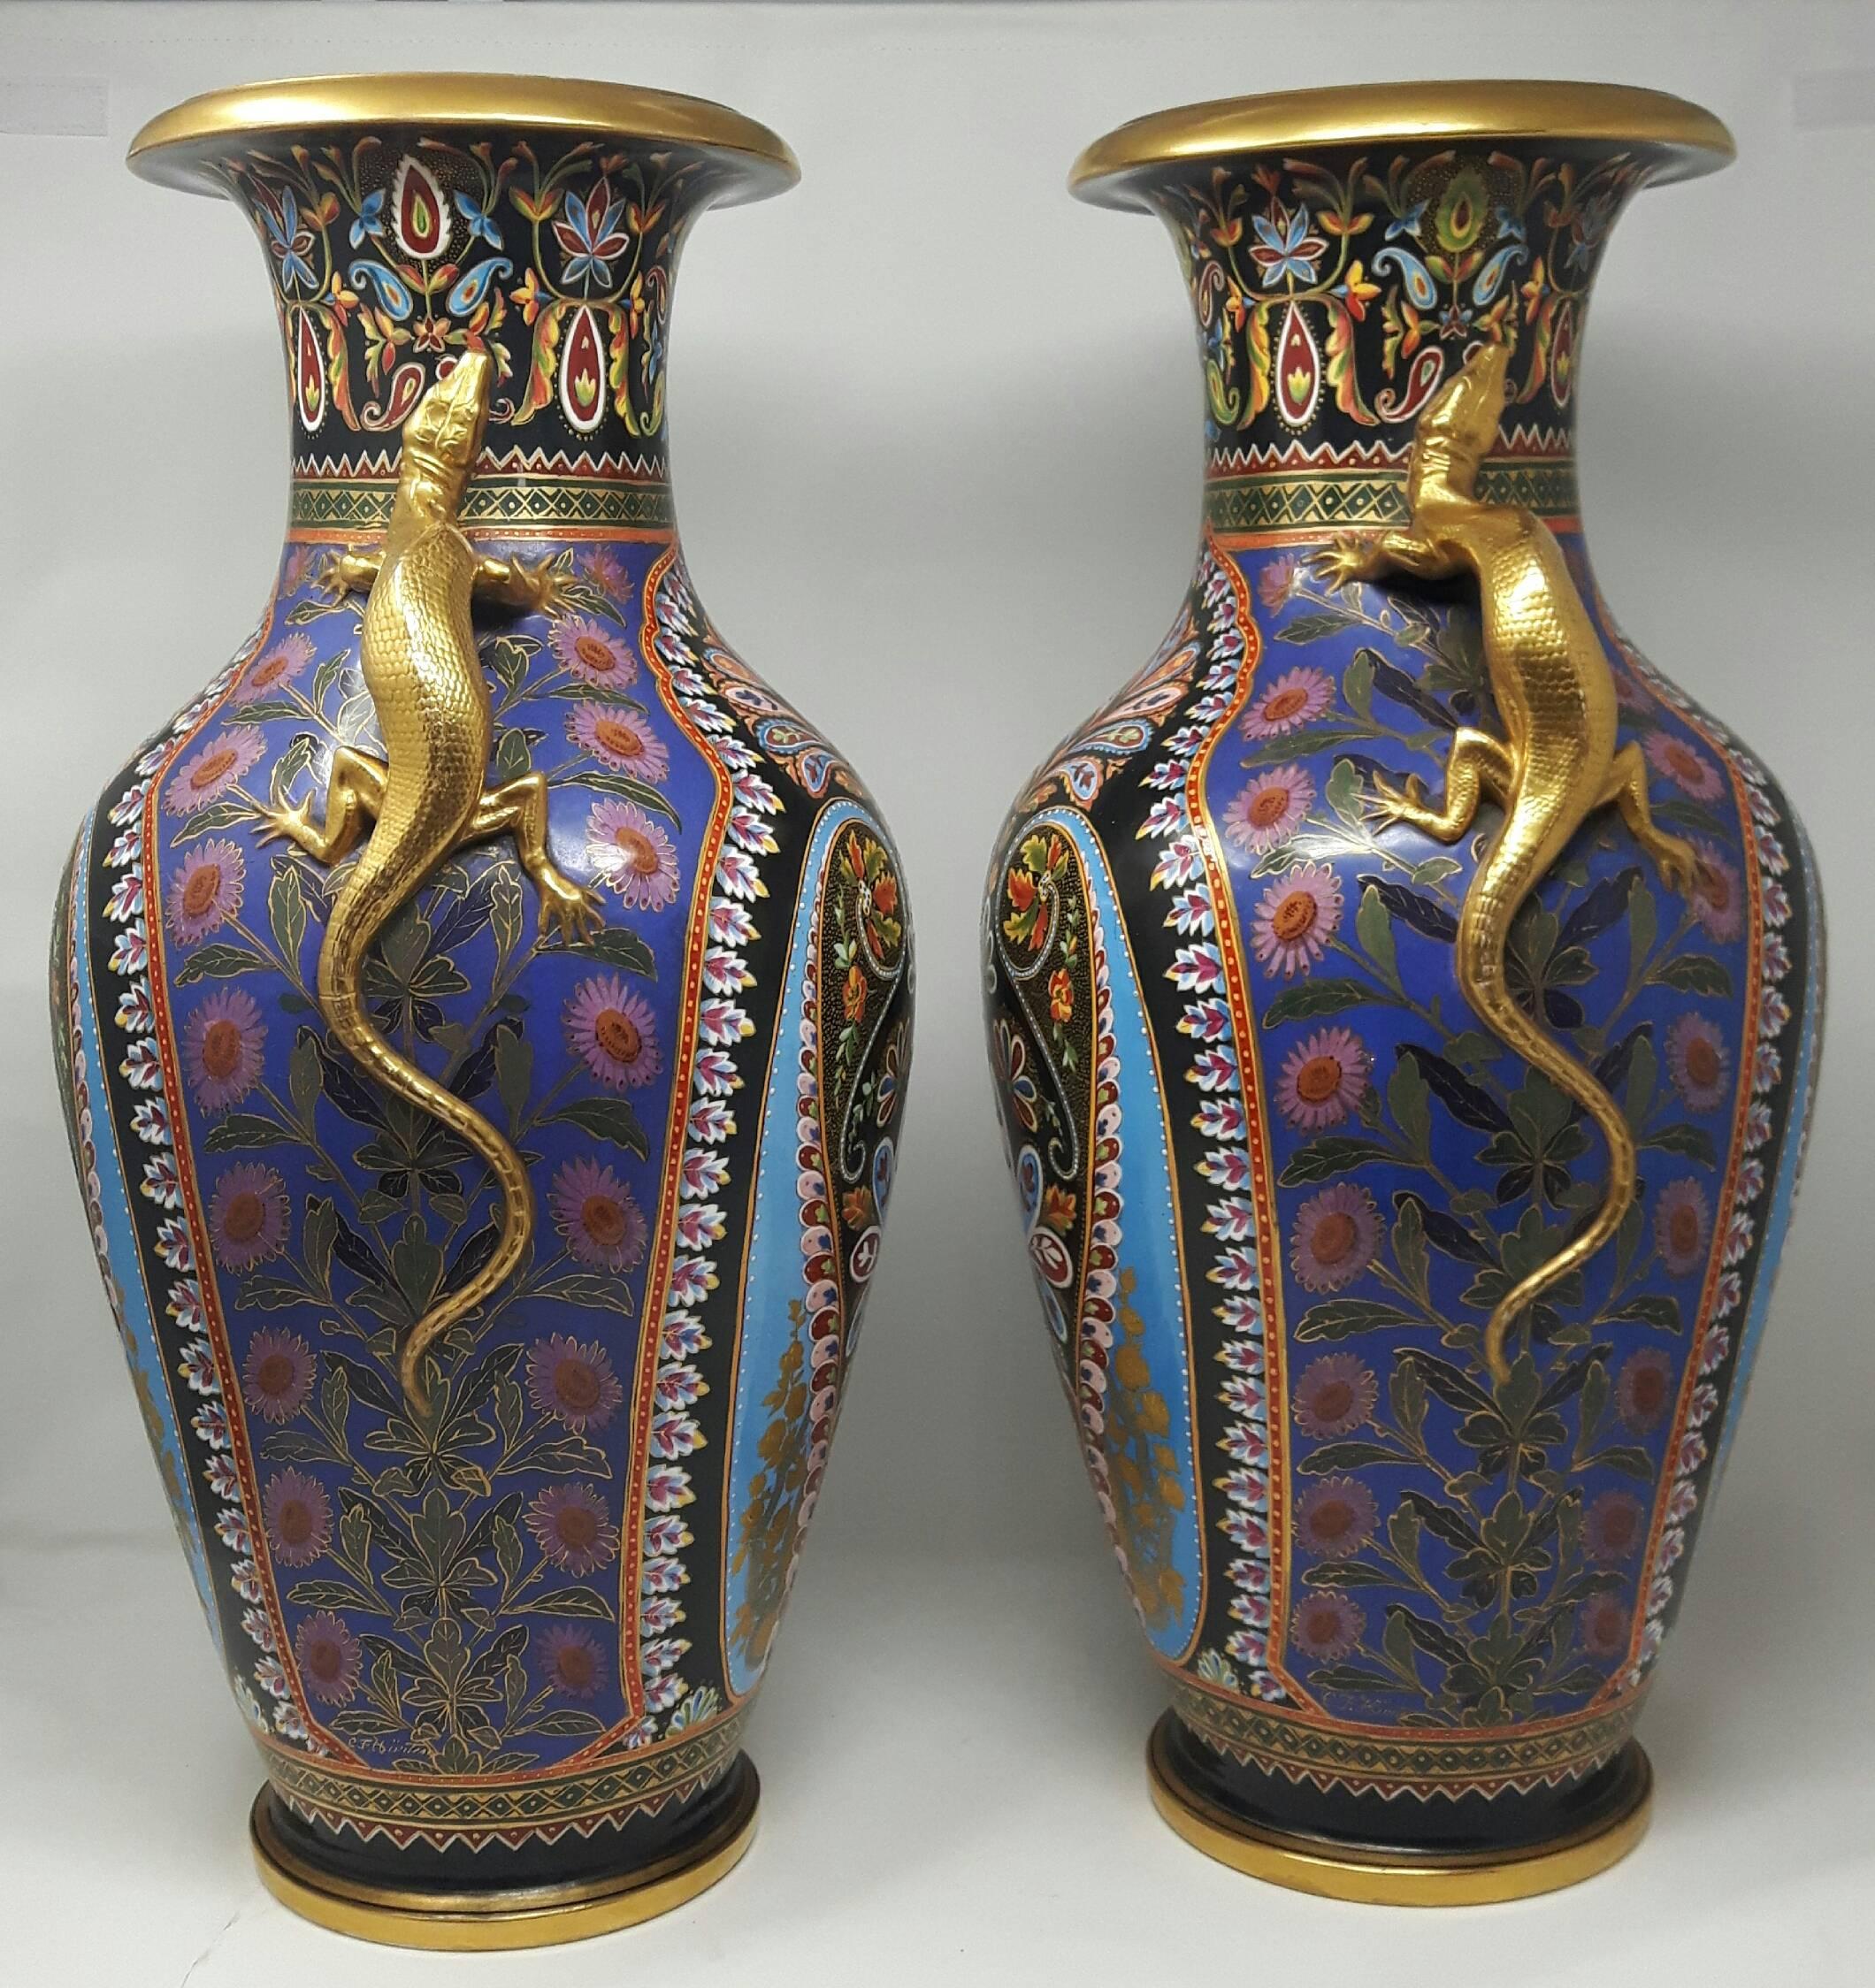 Neoclassical Revival Magnificent Pair of Copeland Vases